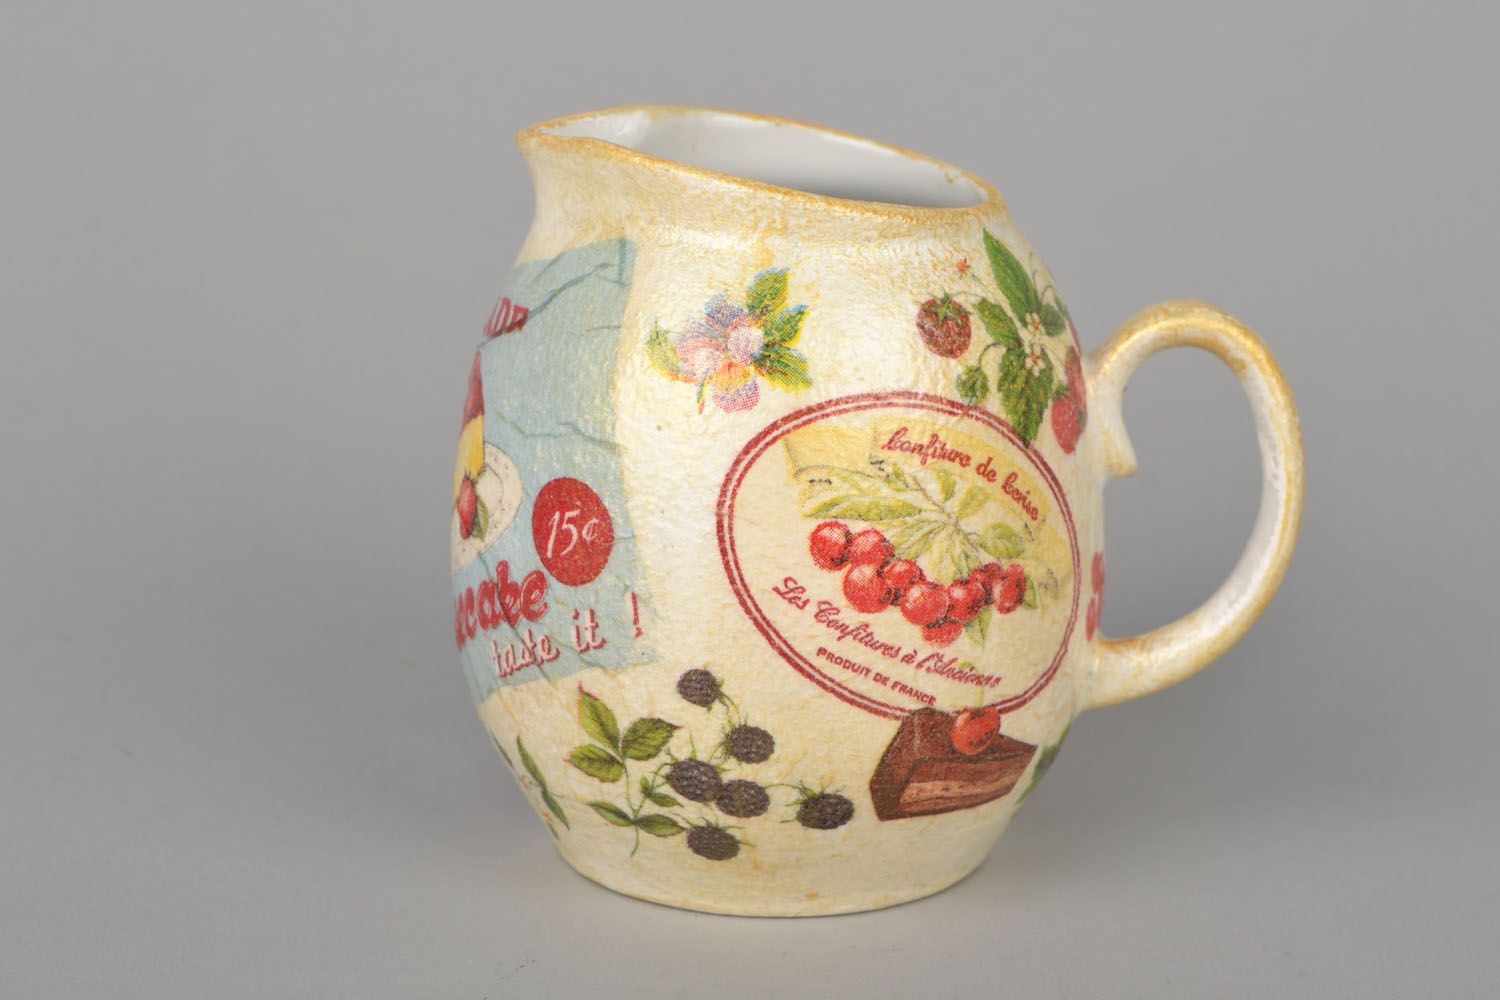 8 oz ceramic creamer jug with handle and decoupage design 0,5 lb photo 3